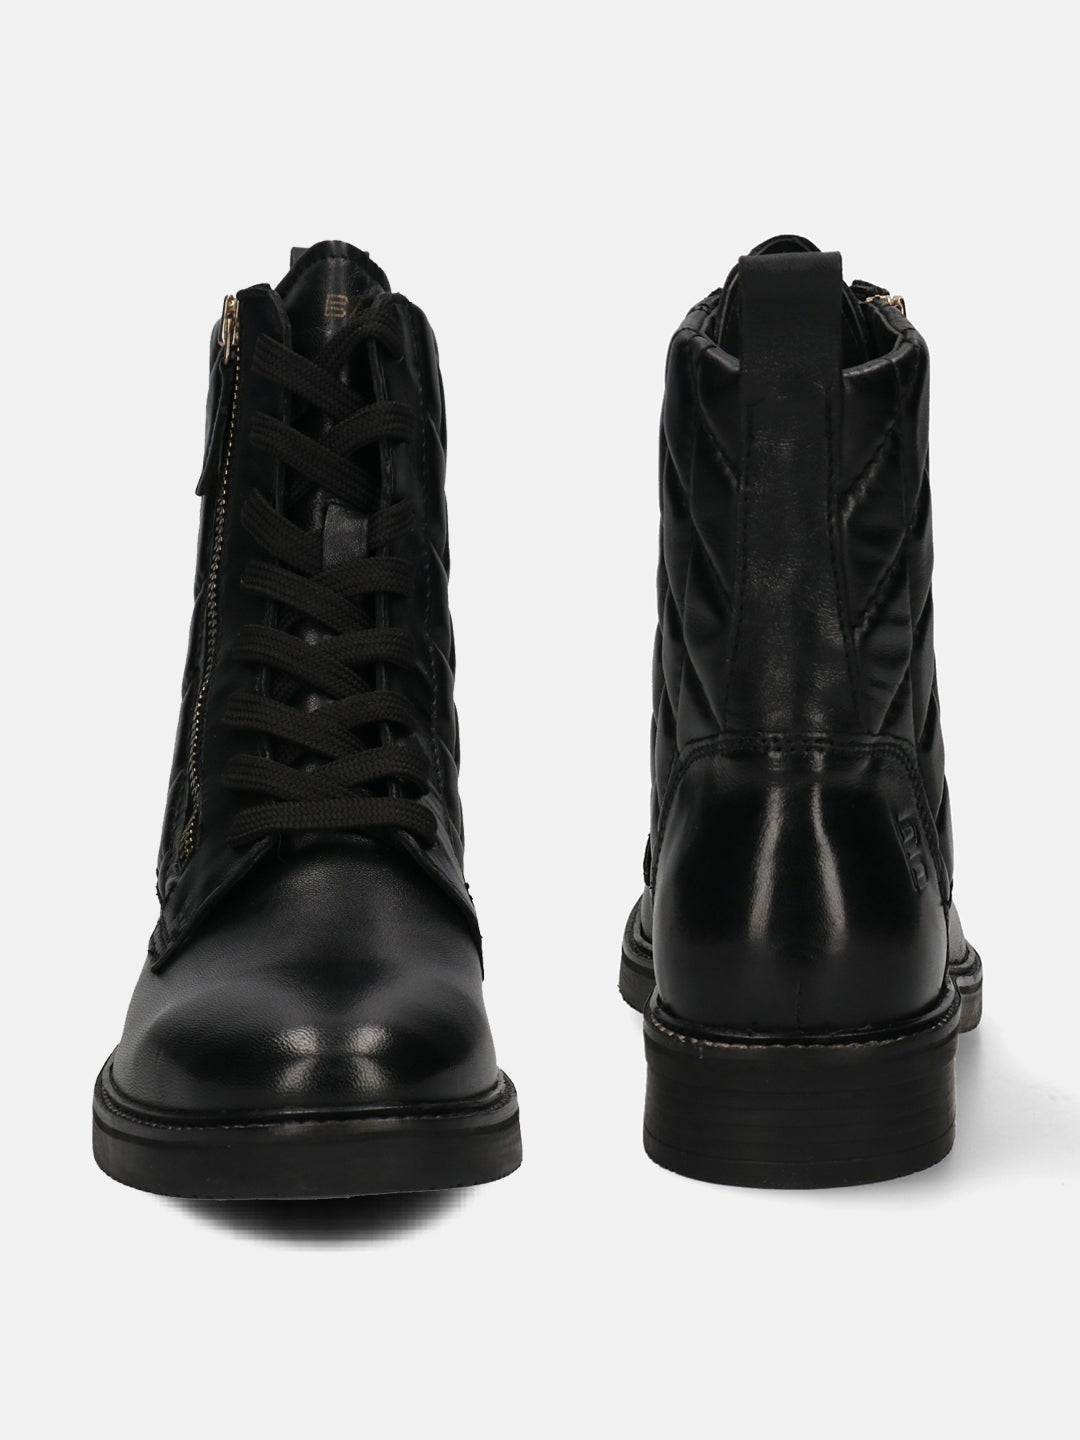 Zina Black Ankle Boots - BAGATT